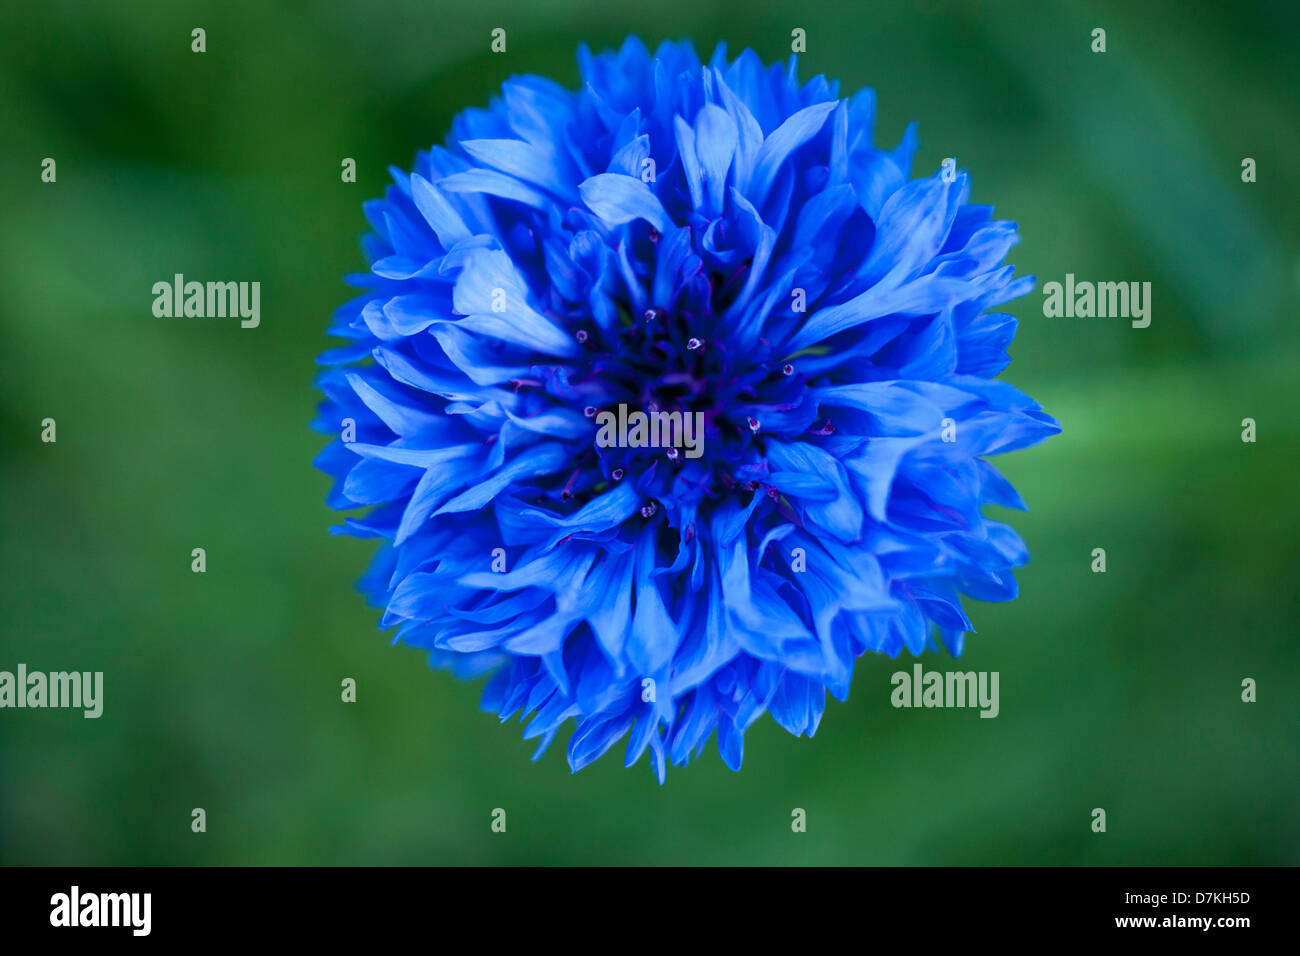 Germany, Bluebottle flower, close up Stock Photo